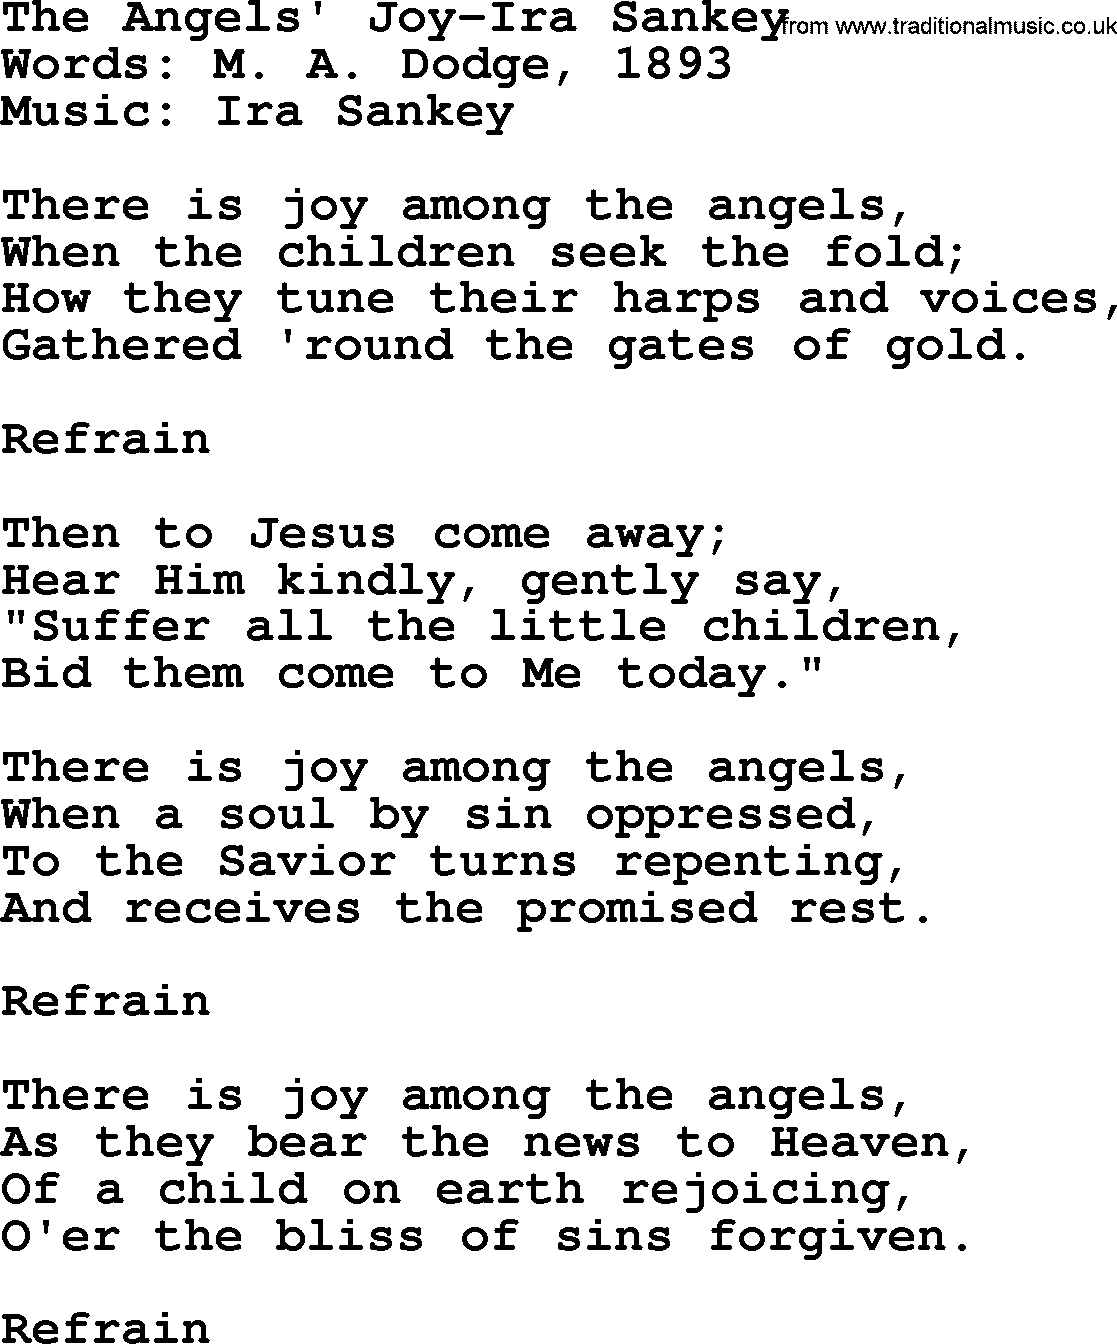 Ira Sankey hymn: The Angels' Joy-Ira Sankey, lyrics